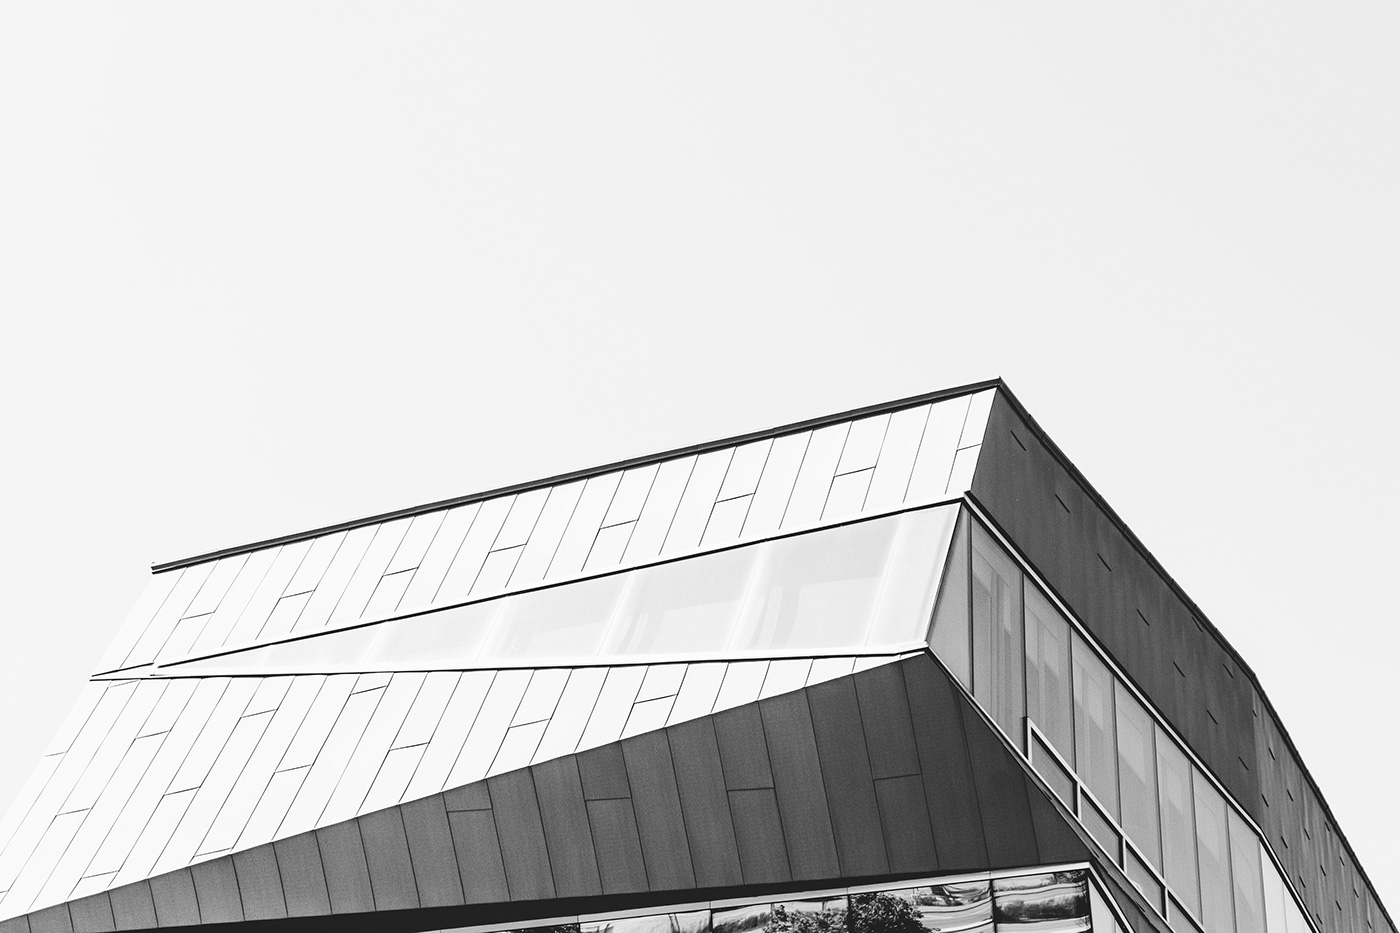 architecture Australia monotone simple modern Layout gray